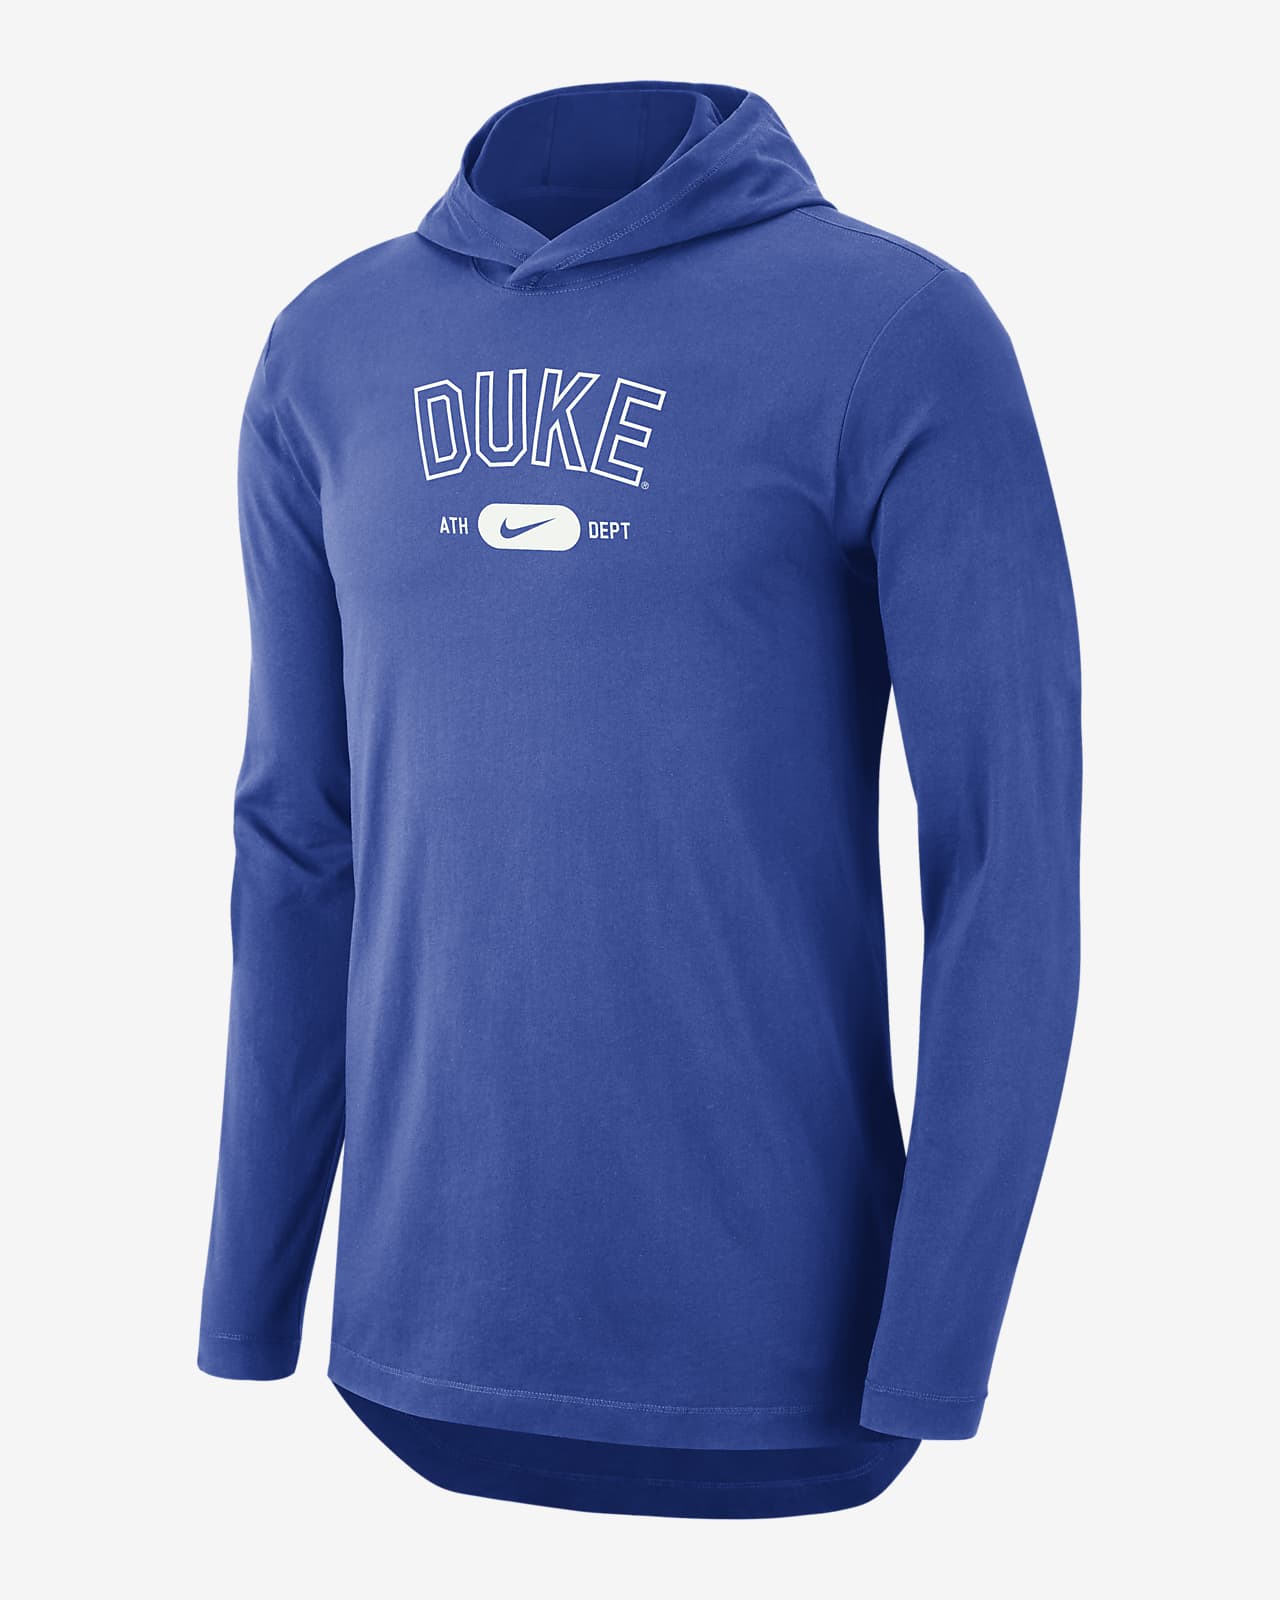 Duke Men's Nike Dri-FIT College Hooded T-Shirt